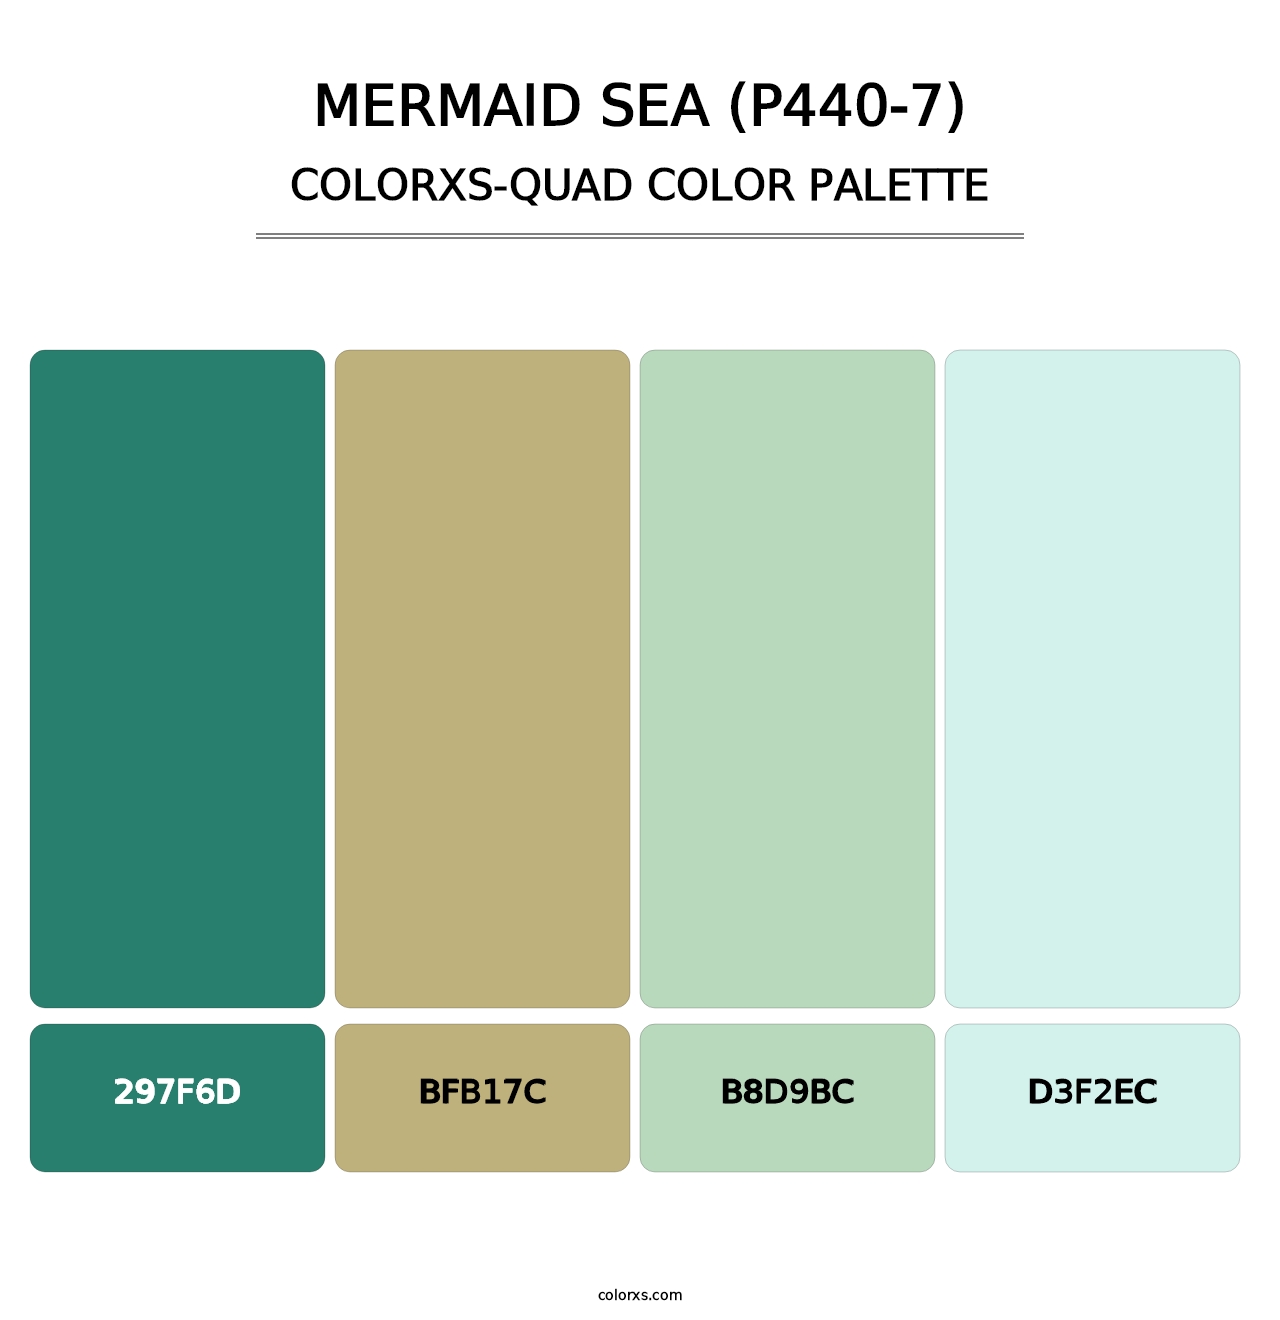 Mermaid Sea (P440-7) - Colorxs Quad Palette